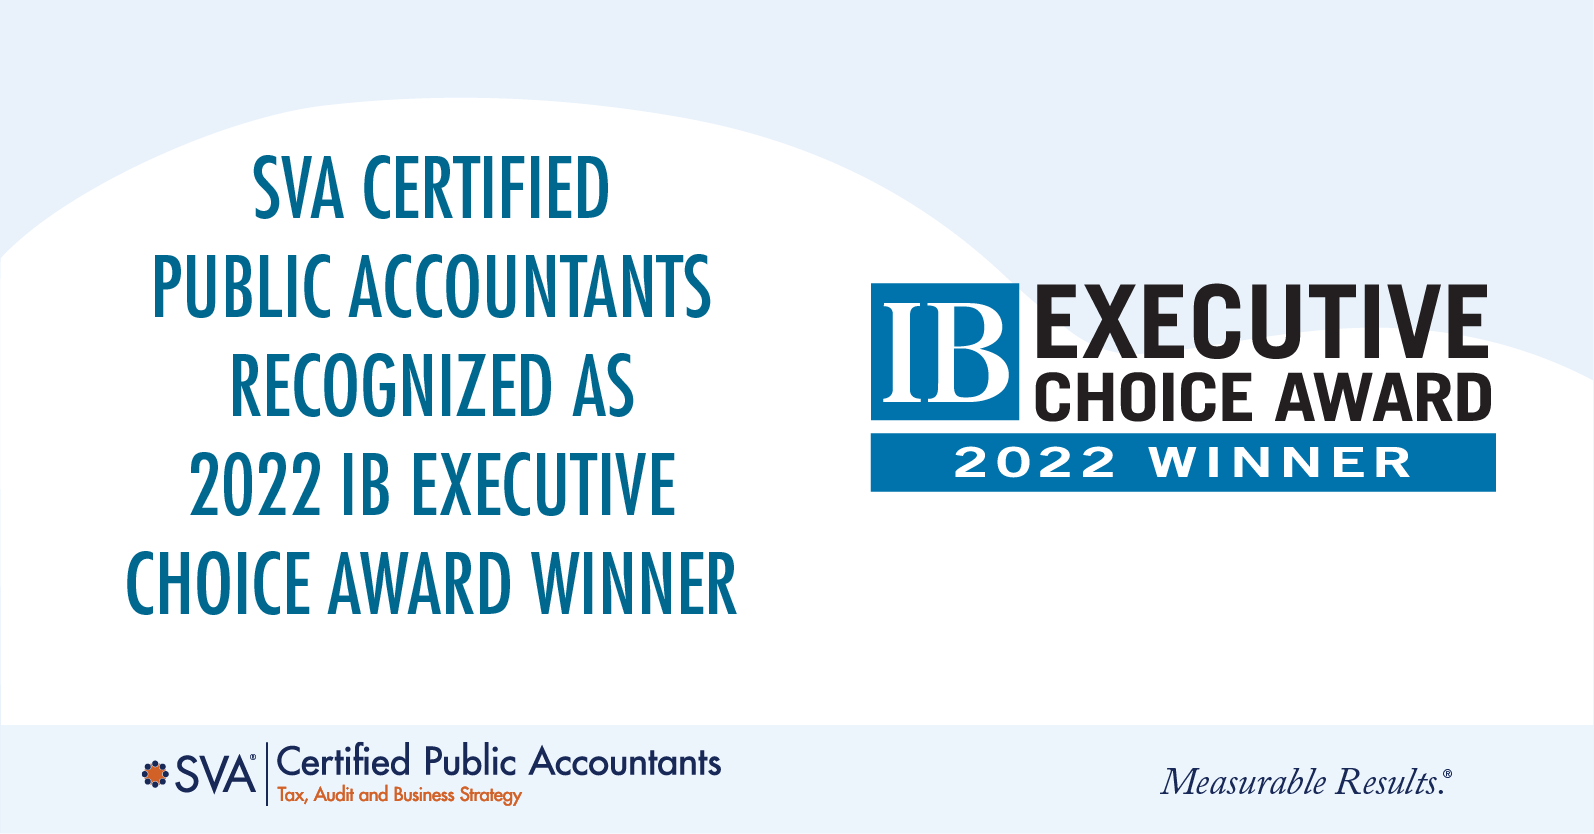 SVA Certified Public Accountants Recognized as 2022 IB Executive Choice Award Winner